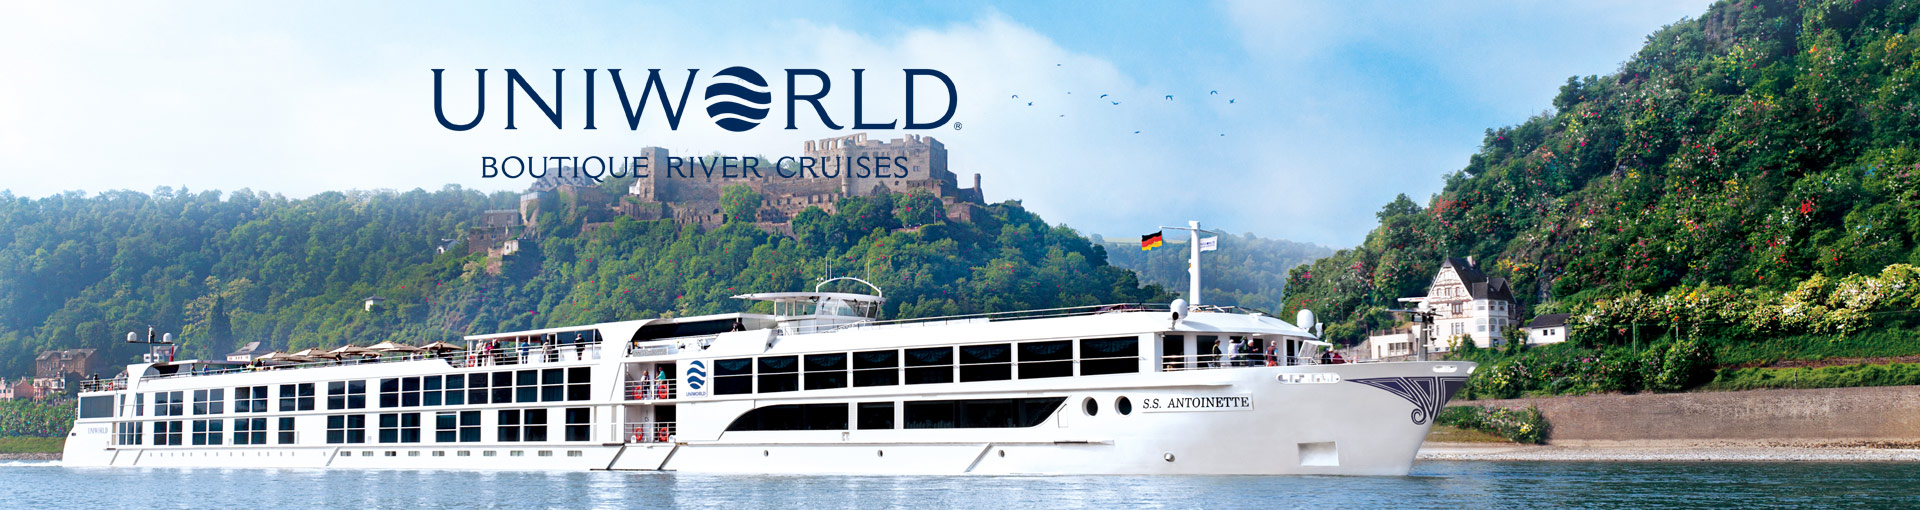 uniworld river cruises australia